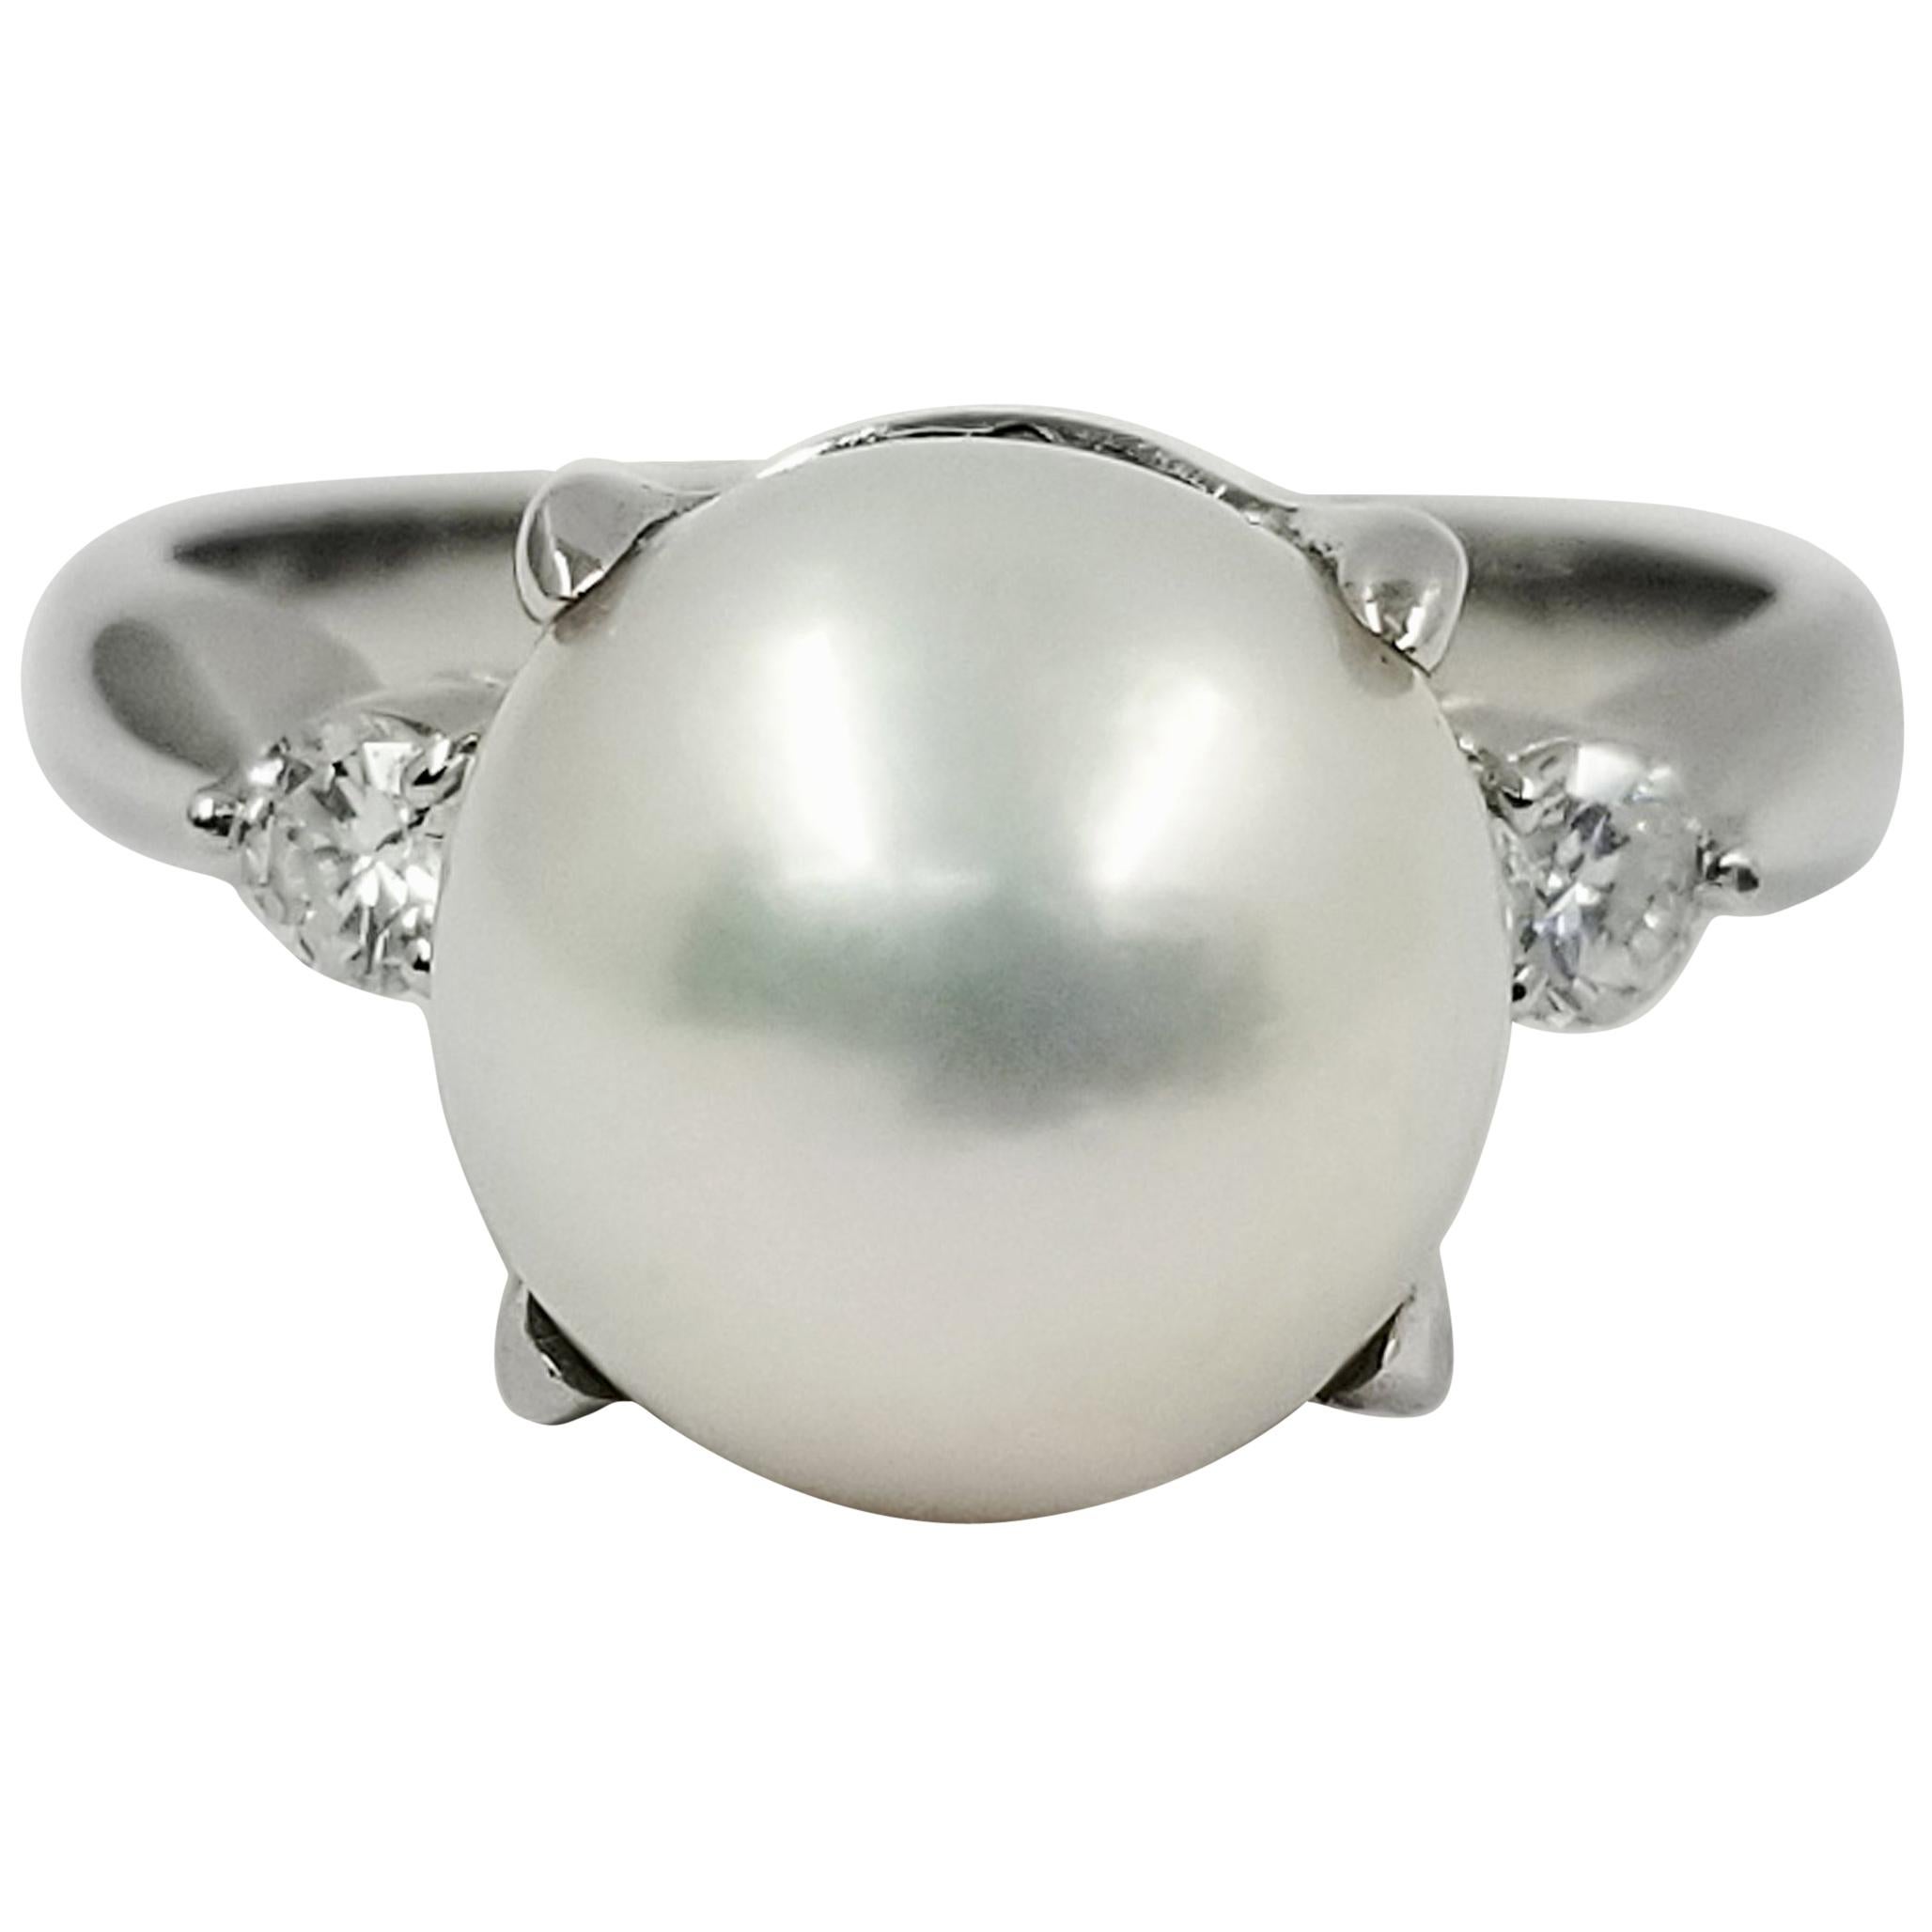 Platinum Cultured Pearl and Diamond Ring